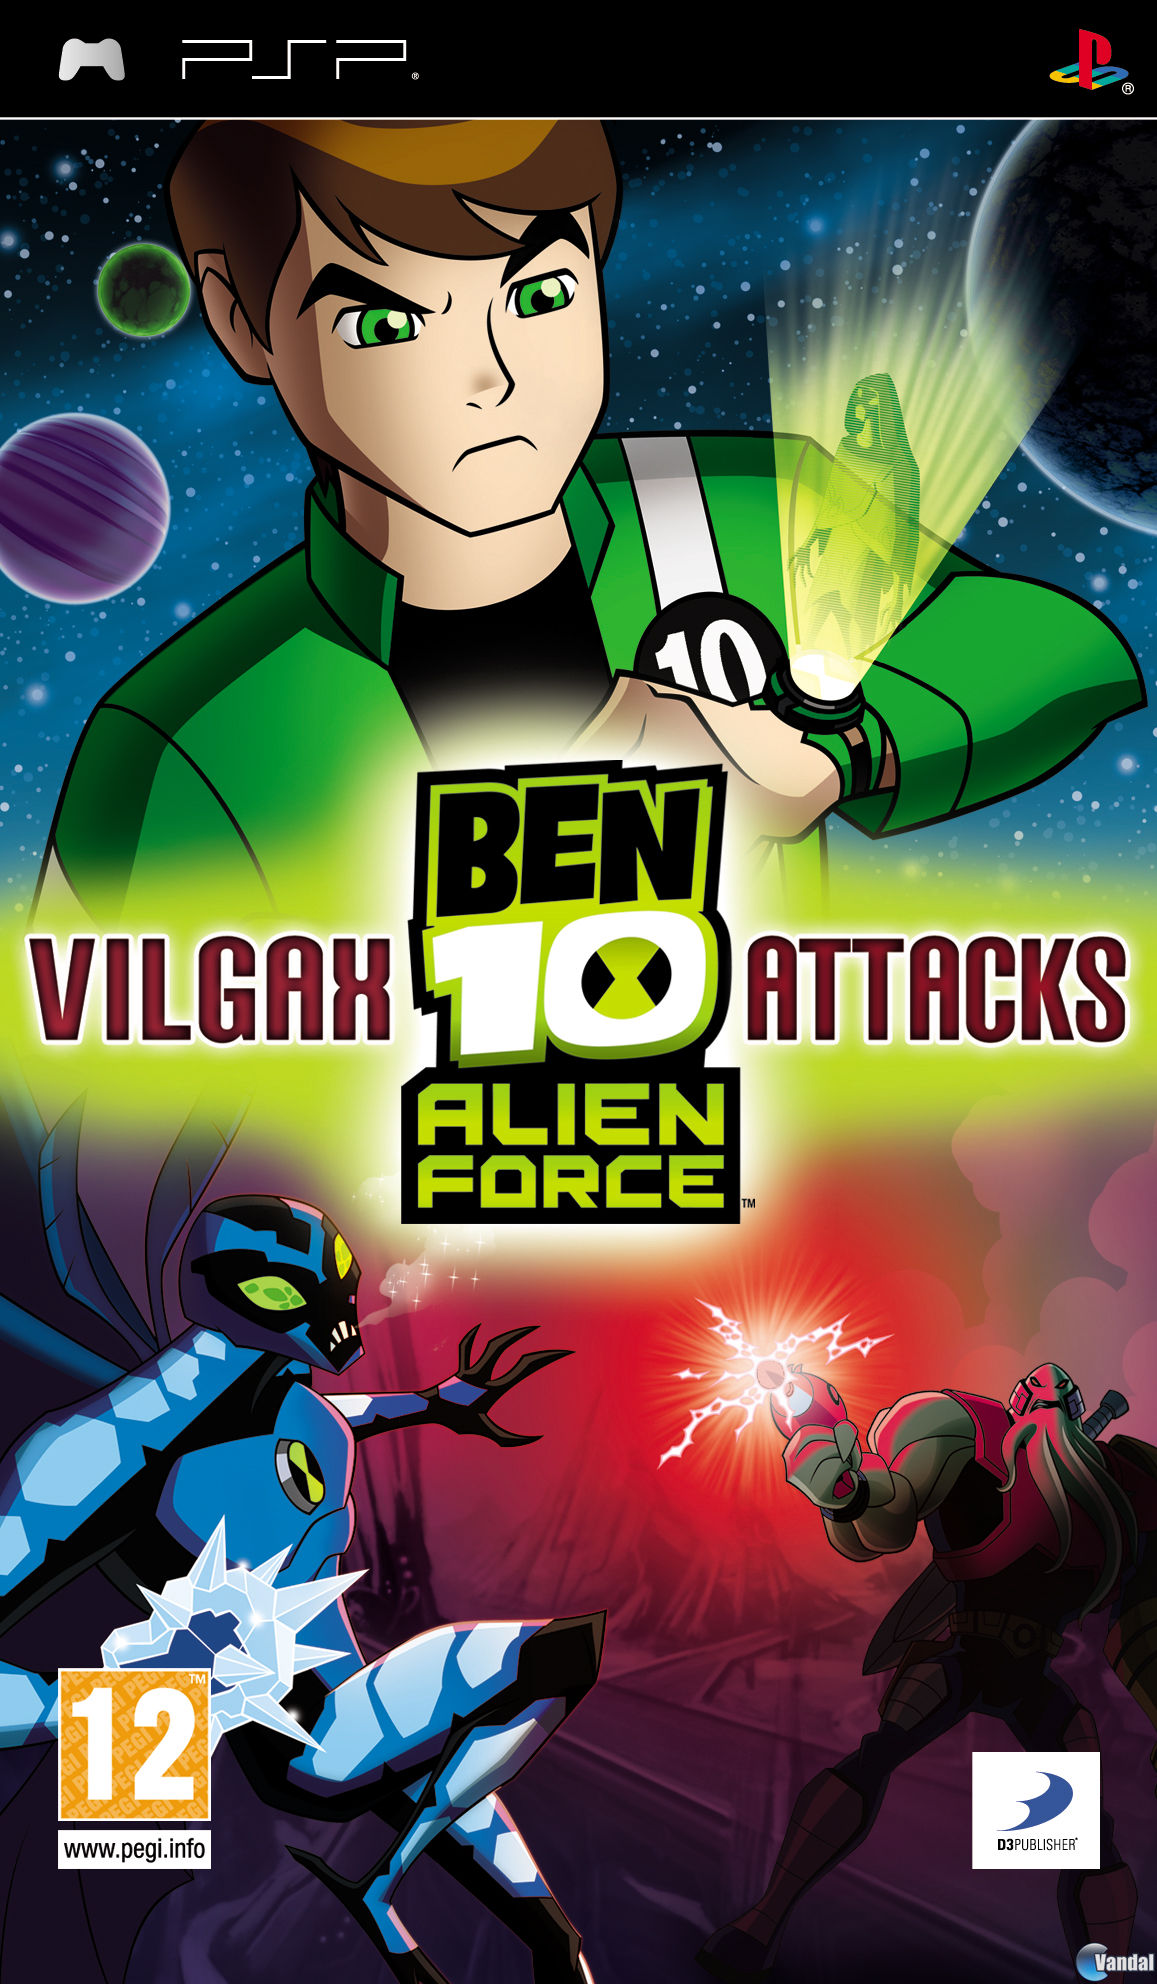 ben-10-alien-force-vilgax-attacks-toda-la-informaci-n-psp-vandal